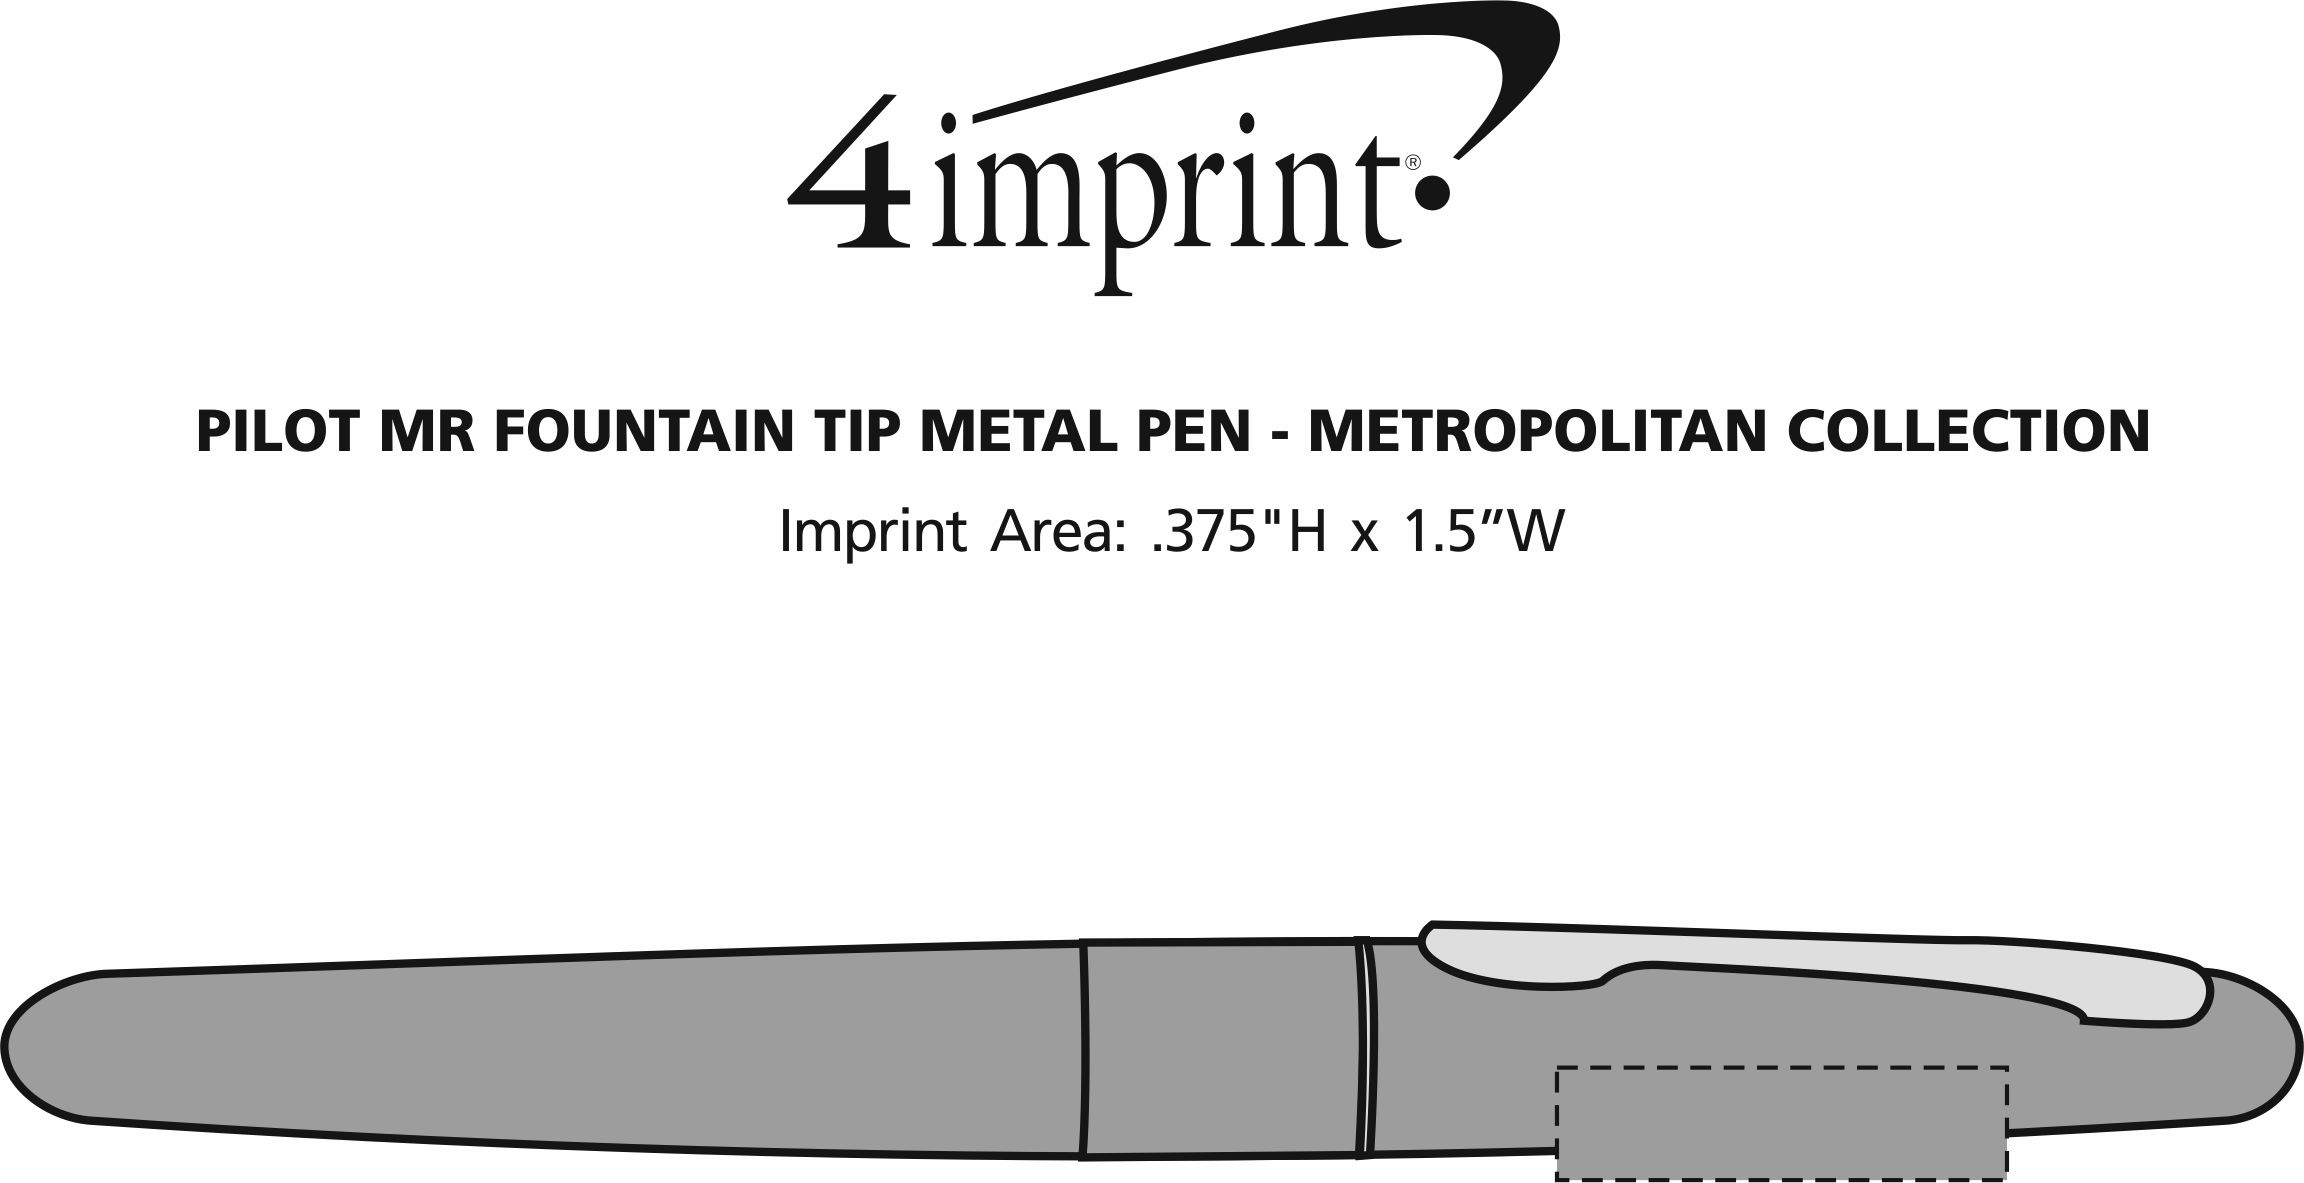 Imprint Area of Pilot MR Fountain Tip Metal Pen - Metropolitan Collection